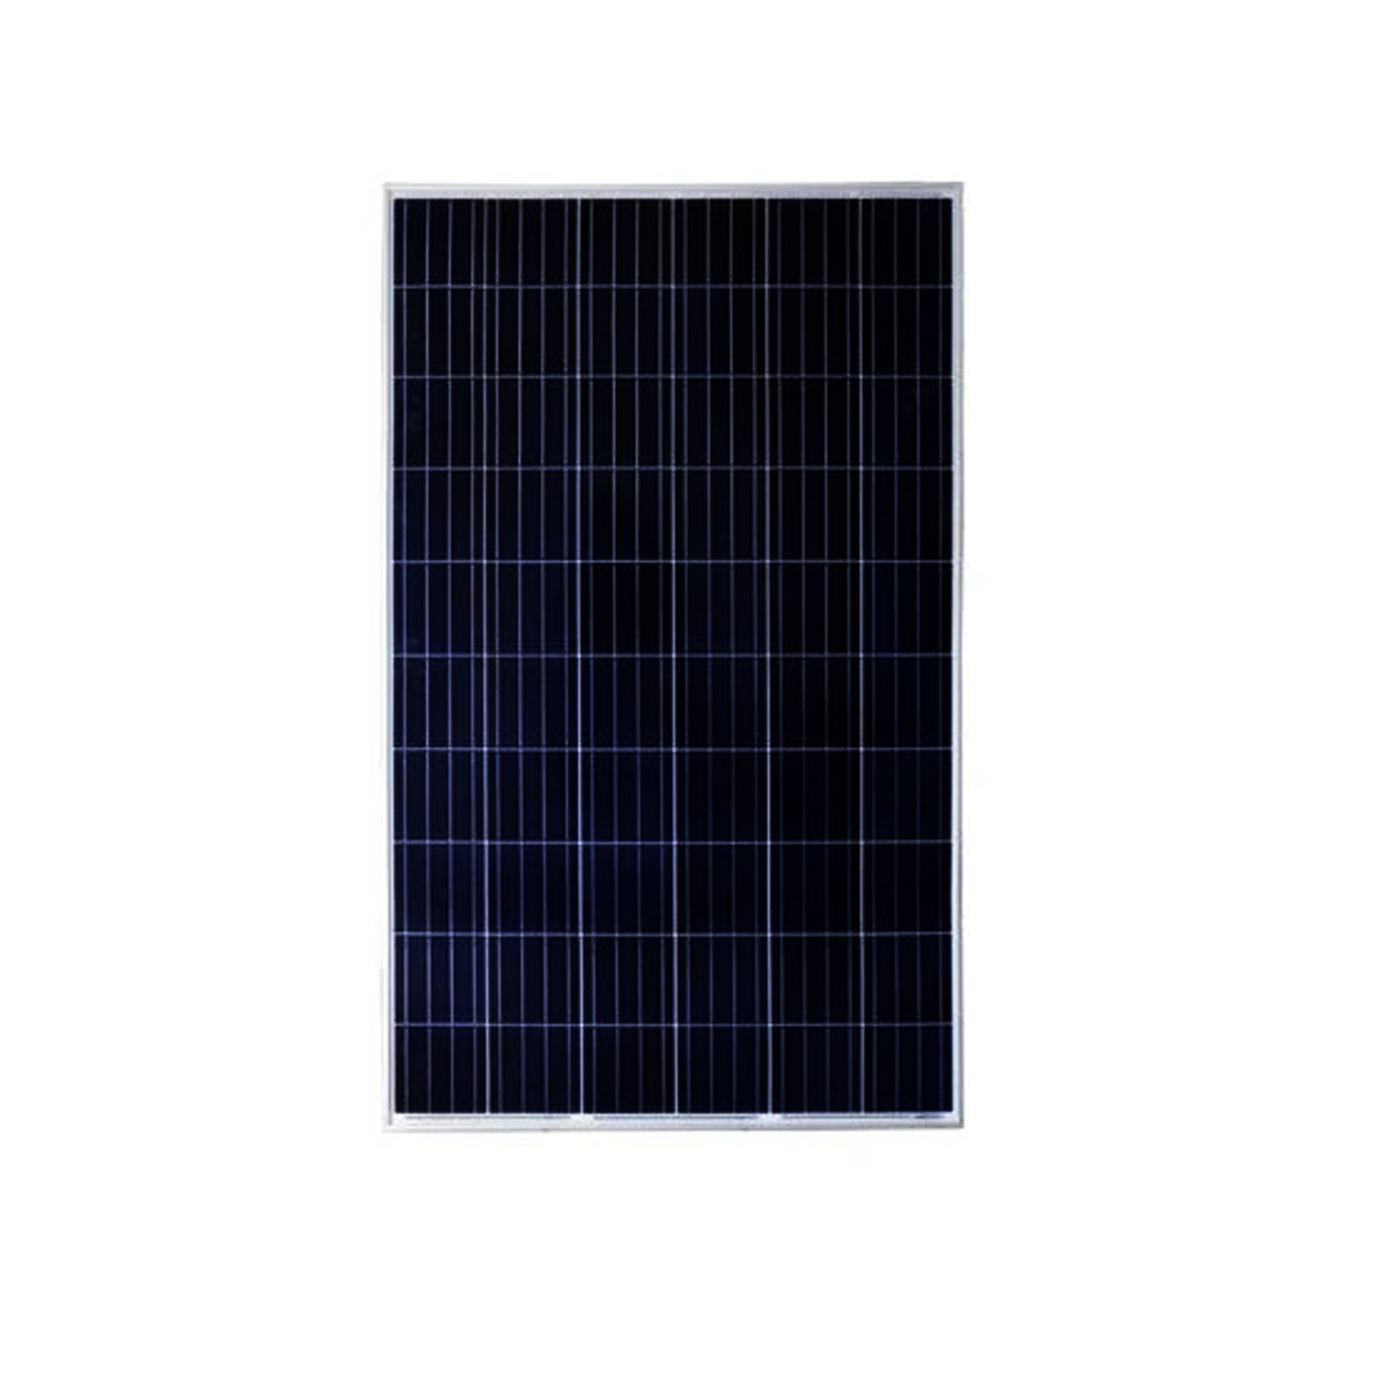 Detec™ Poly crystalline Solar Panel